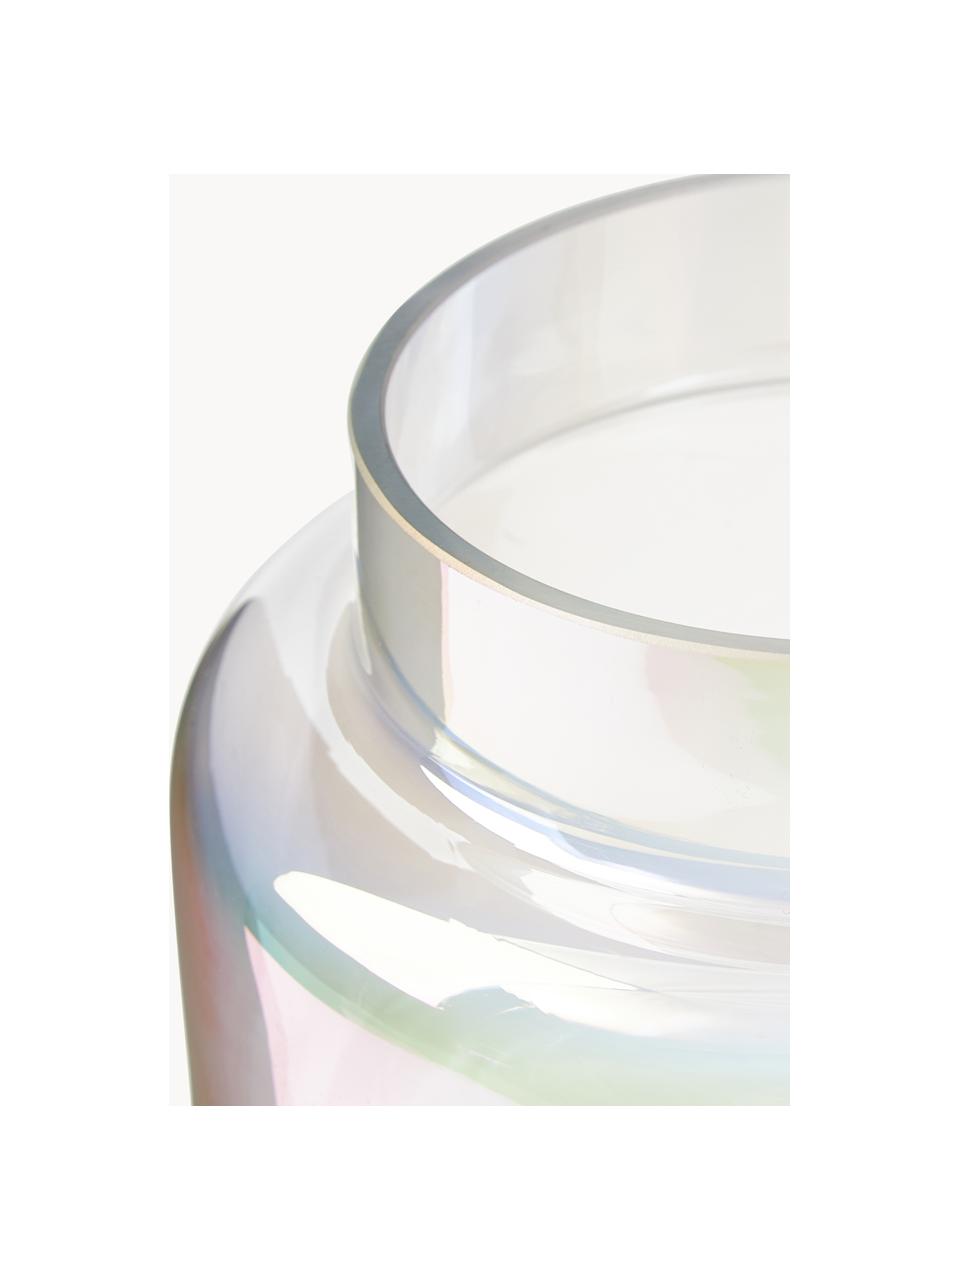 Jarrón de vidrio iridiscente Lasse, Vidrio, Transparente iridiscente, Ø 16 x Al 14 cm